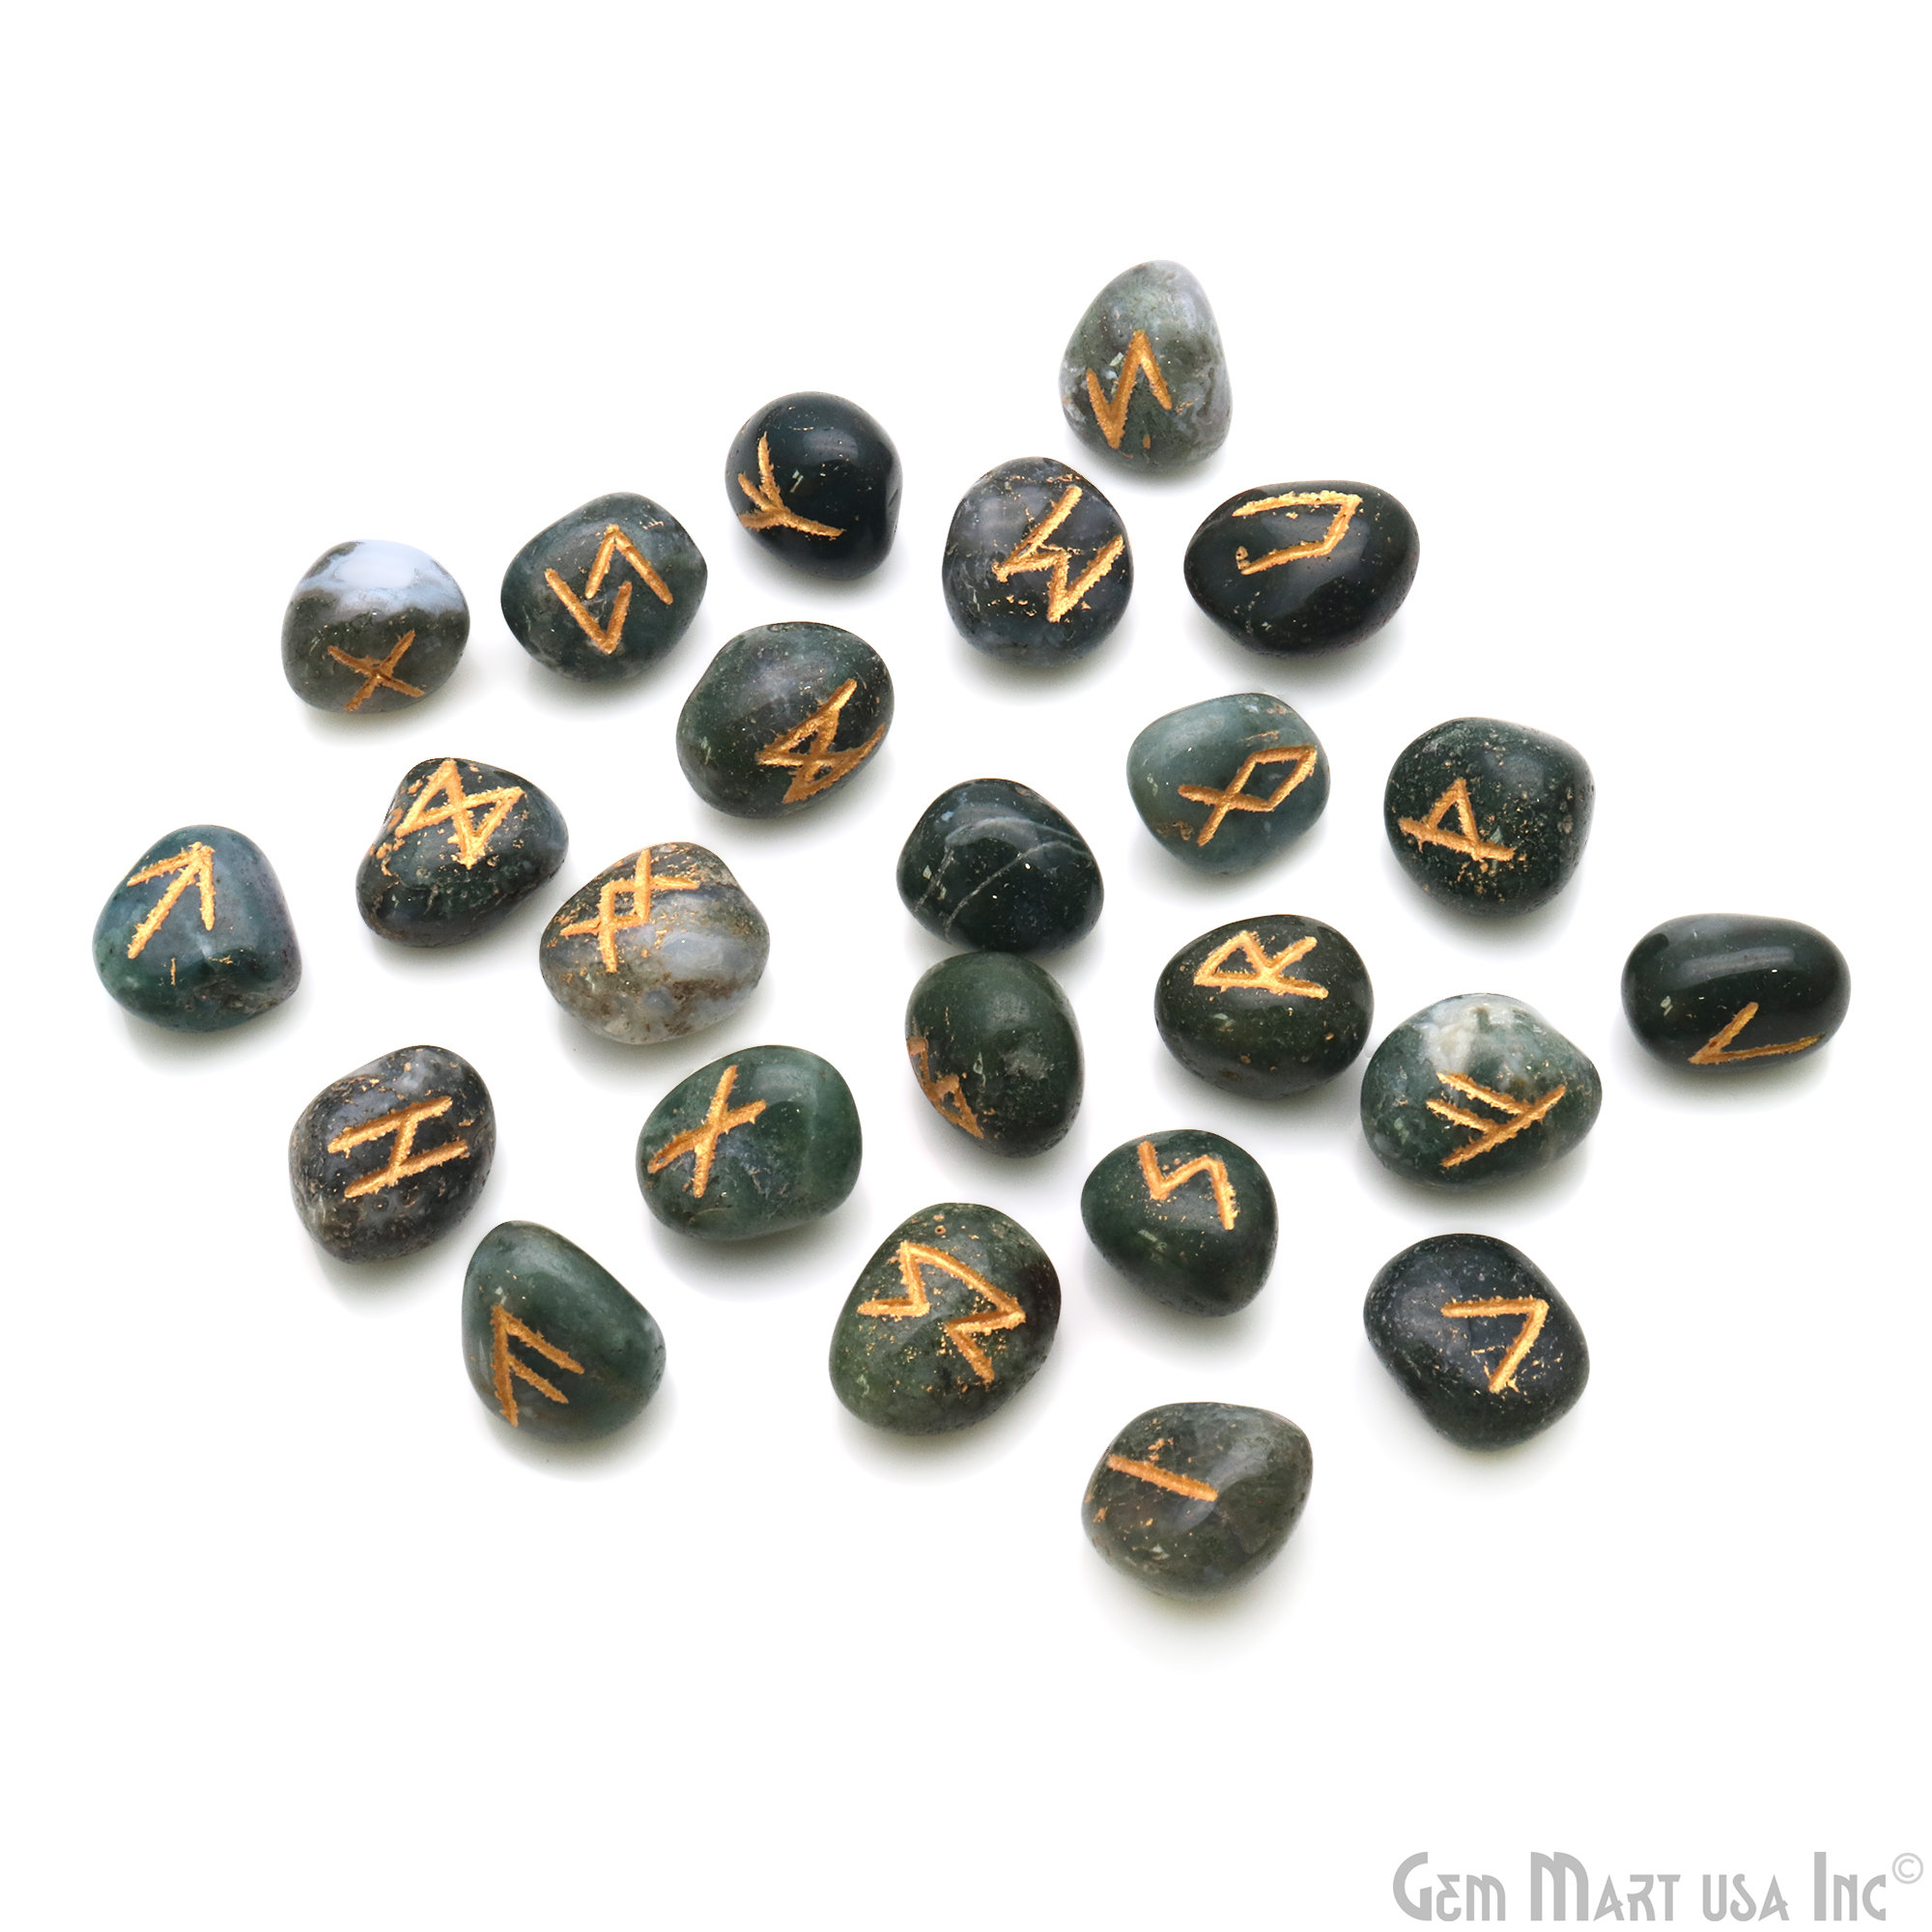 Bloodstone Set of Rune Stones